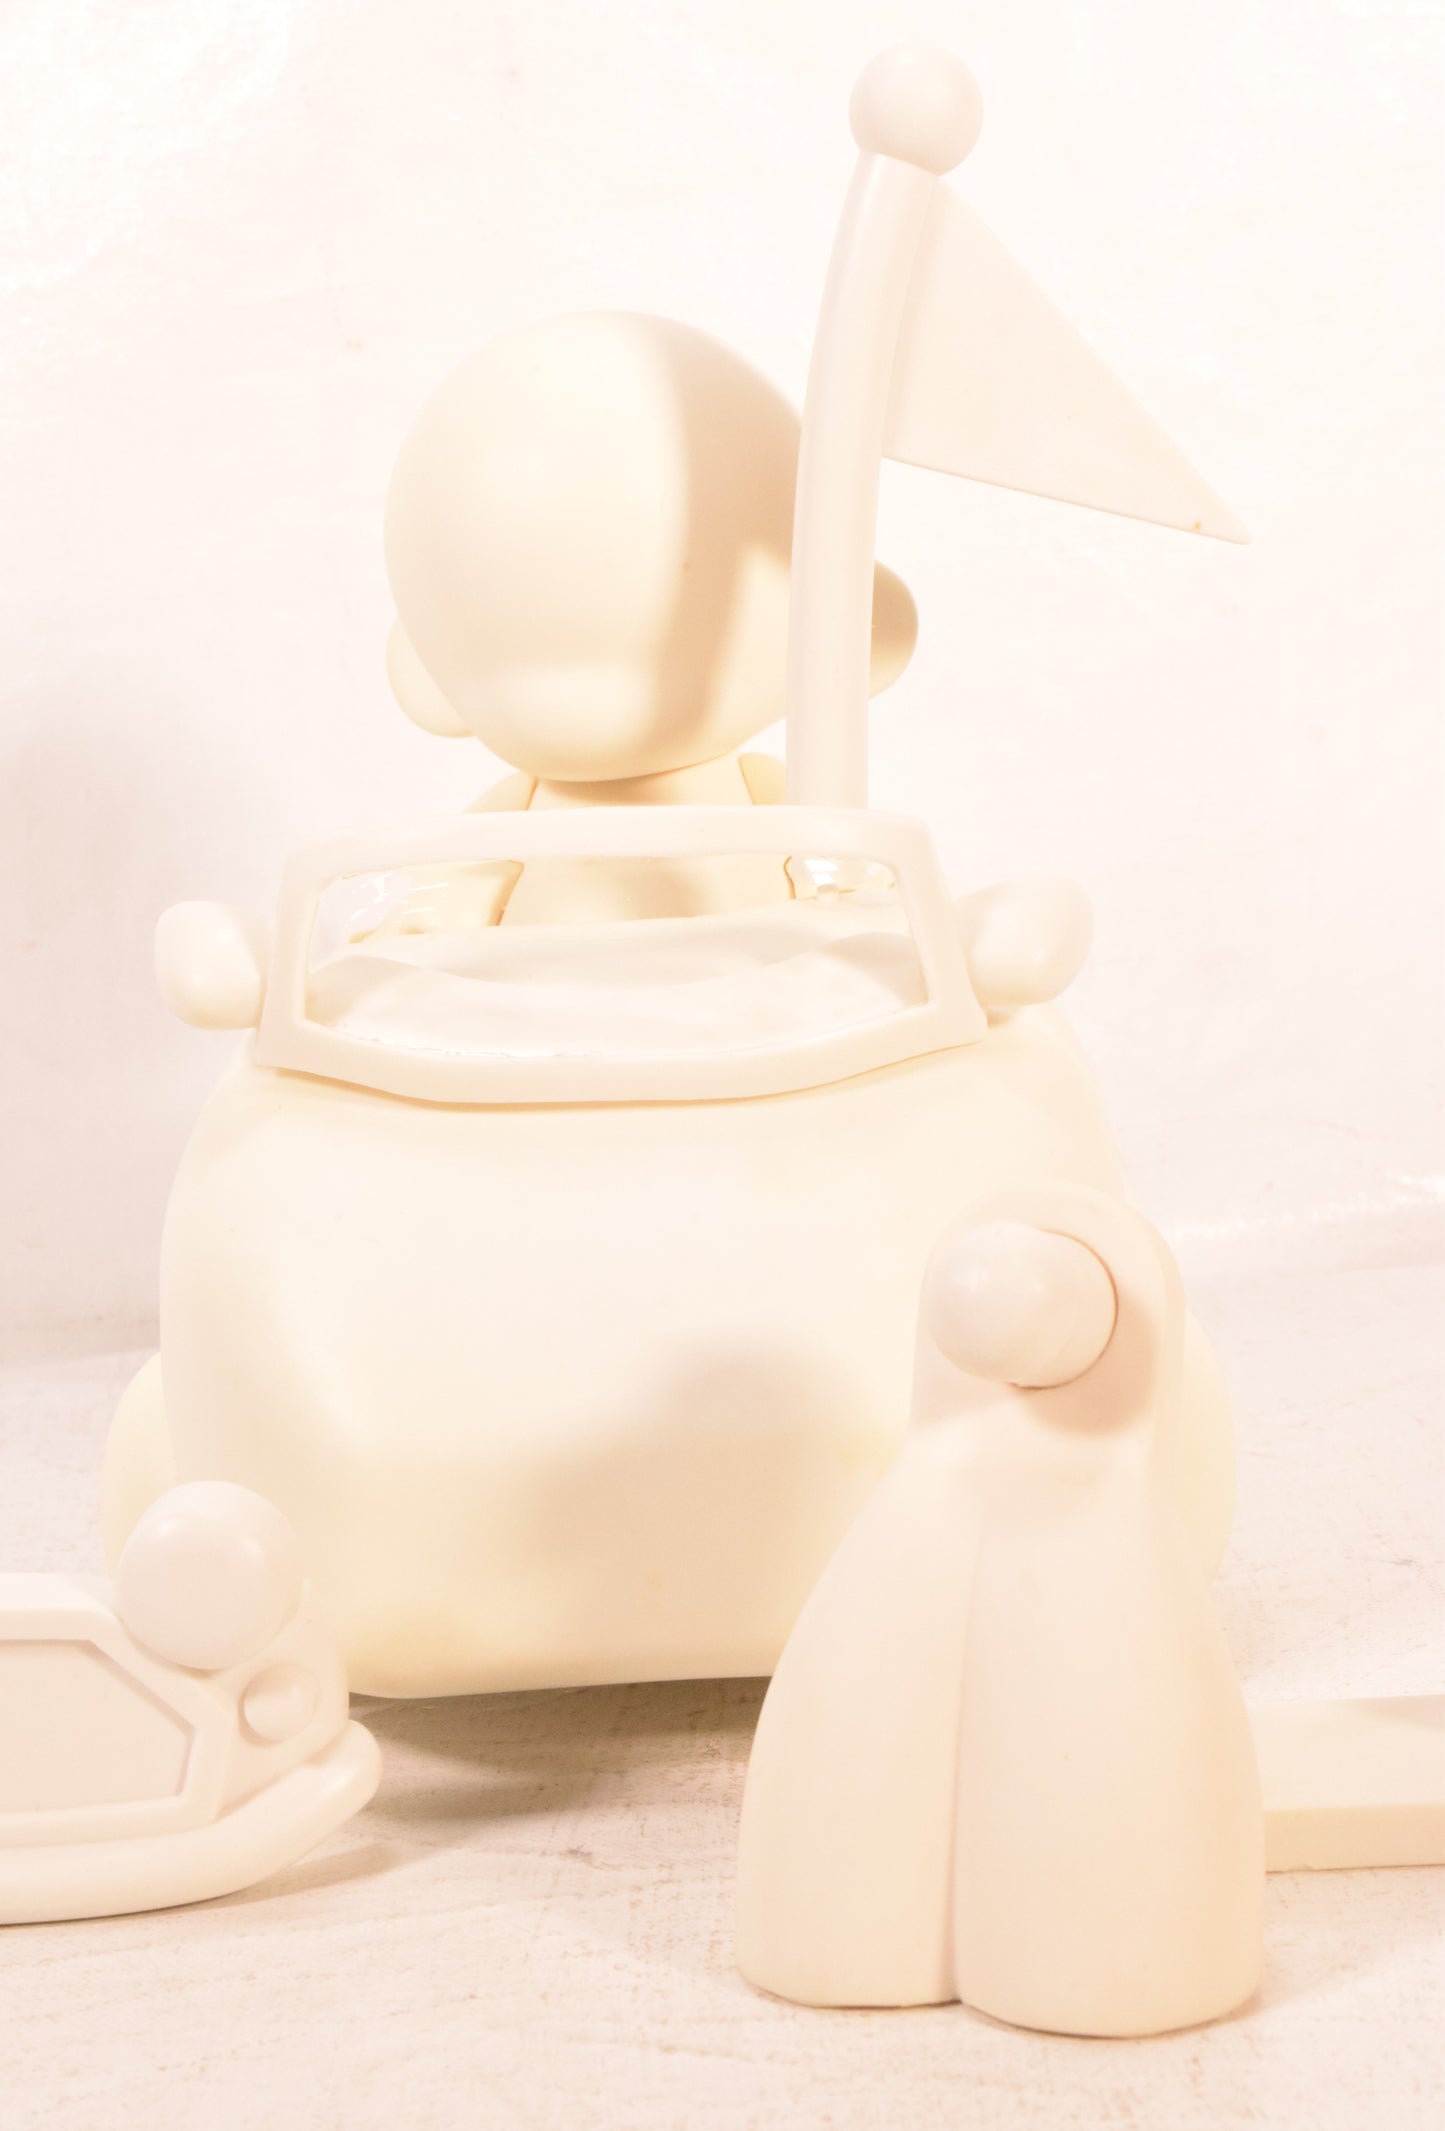 Kidrobot Mini Munny Mobile Munnyworld White Vinyl Toy